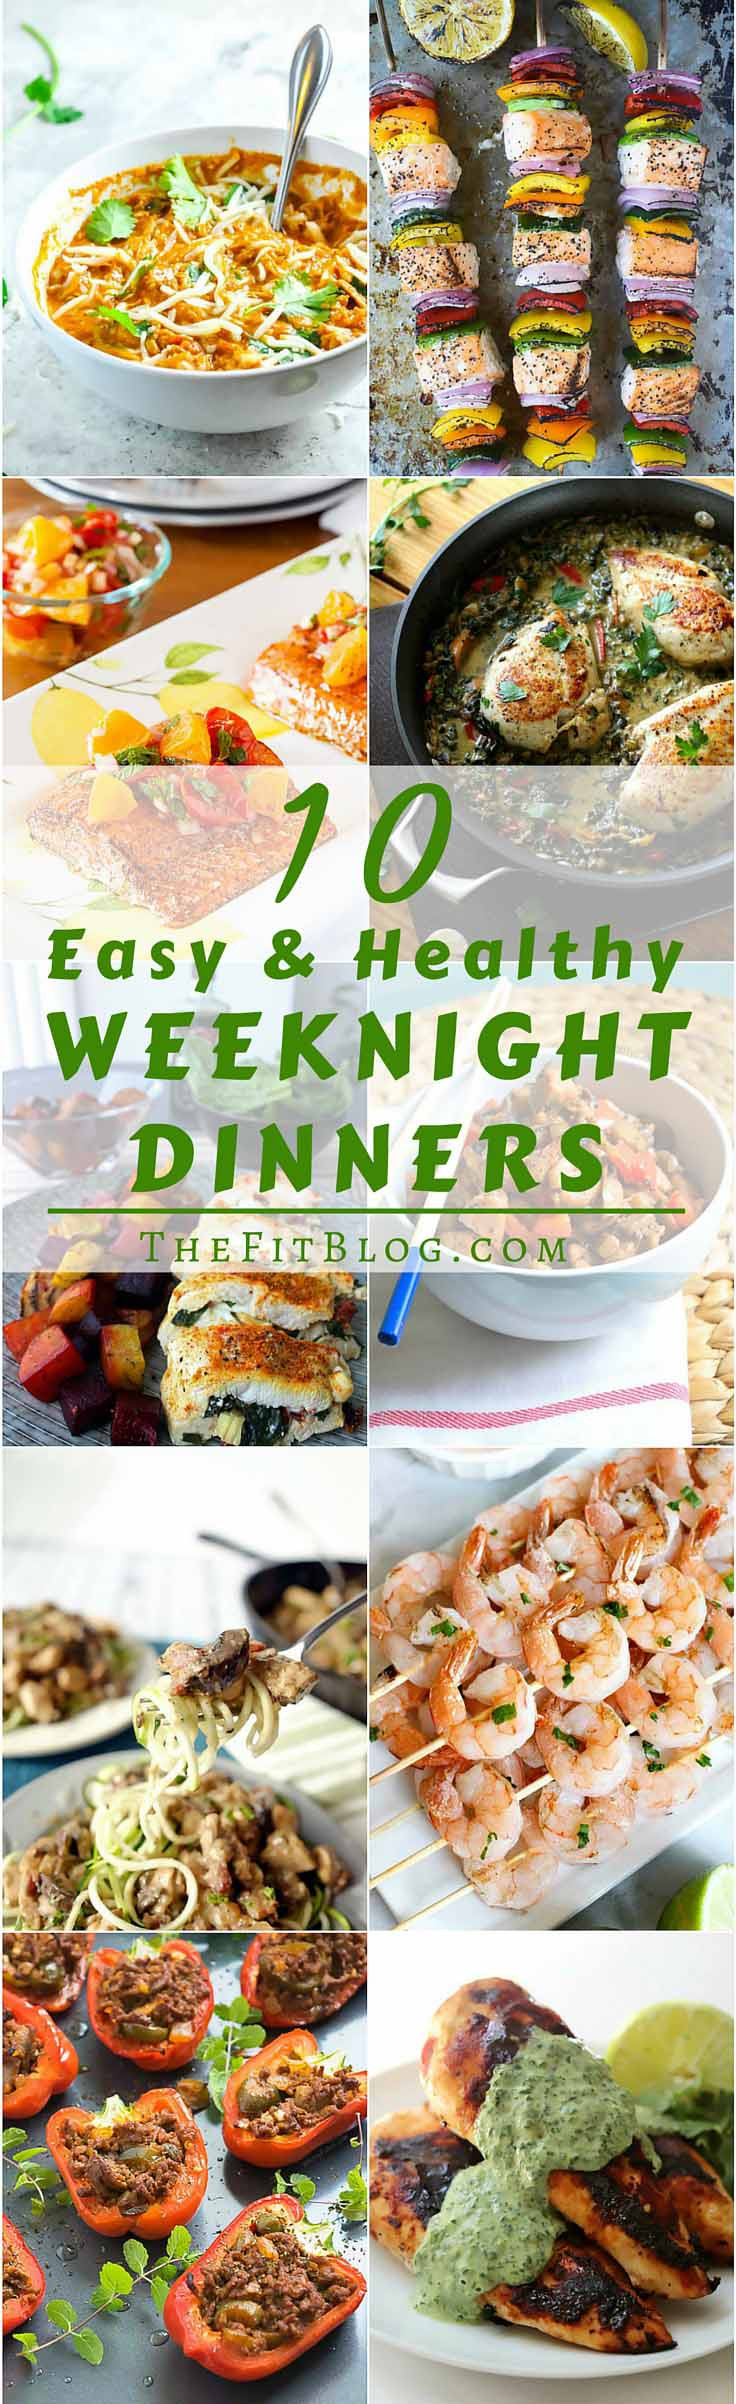 Easy Weeknight Healthy Dinners
 10 Healthy and Easy Weeknight Dinners